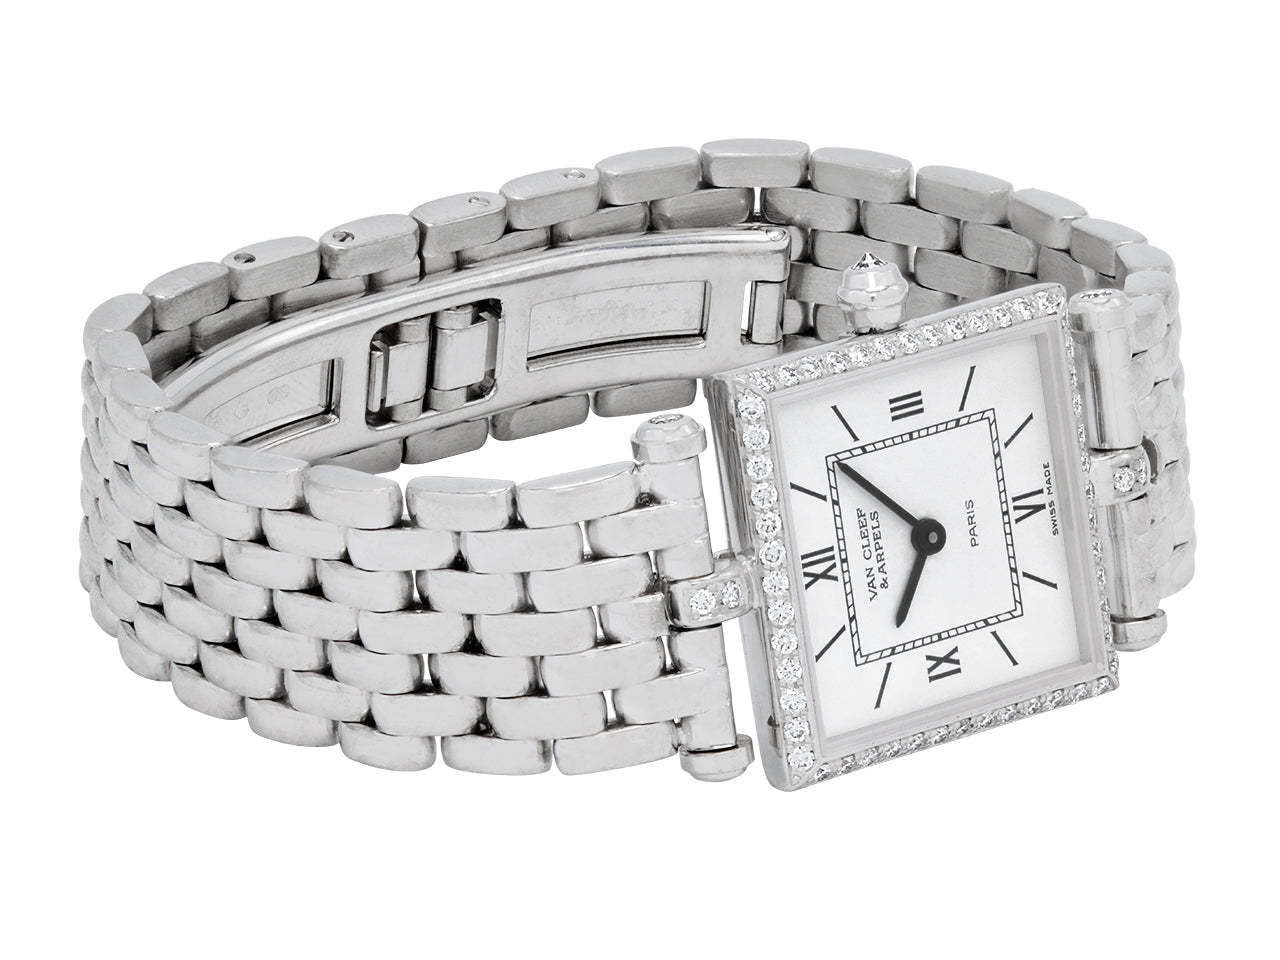 Van Cleef & Arpels 'Classique' Diamond Lady's Watch in 18K White Gold